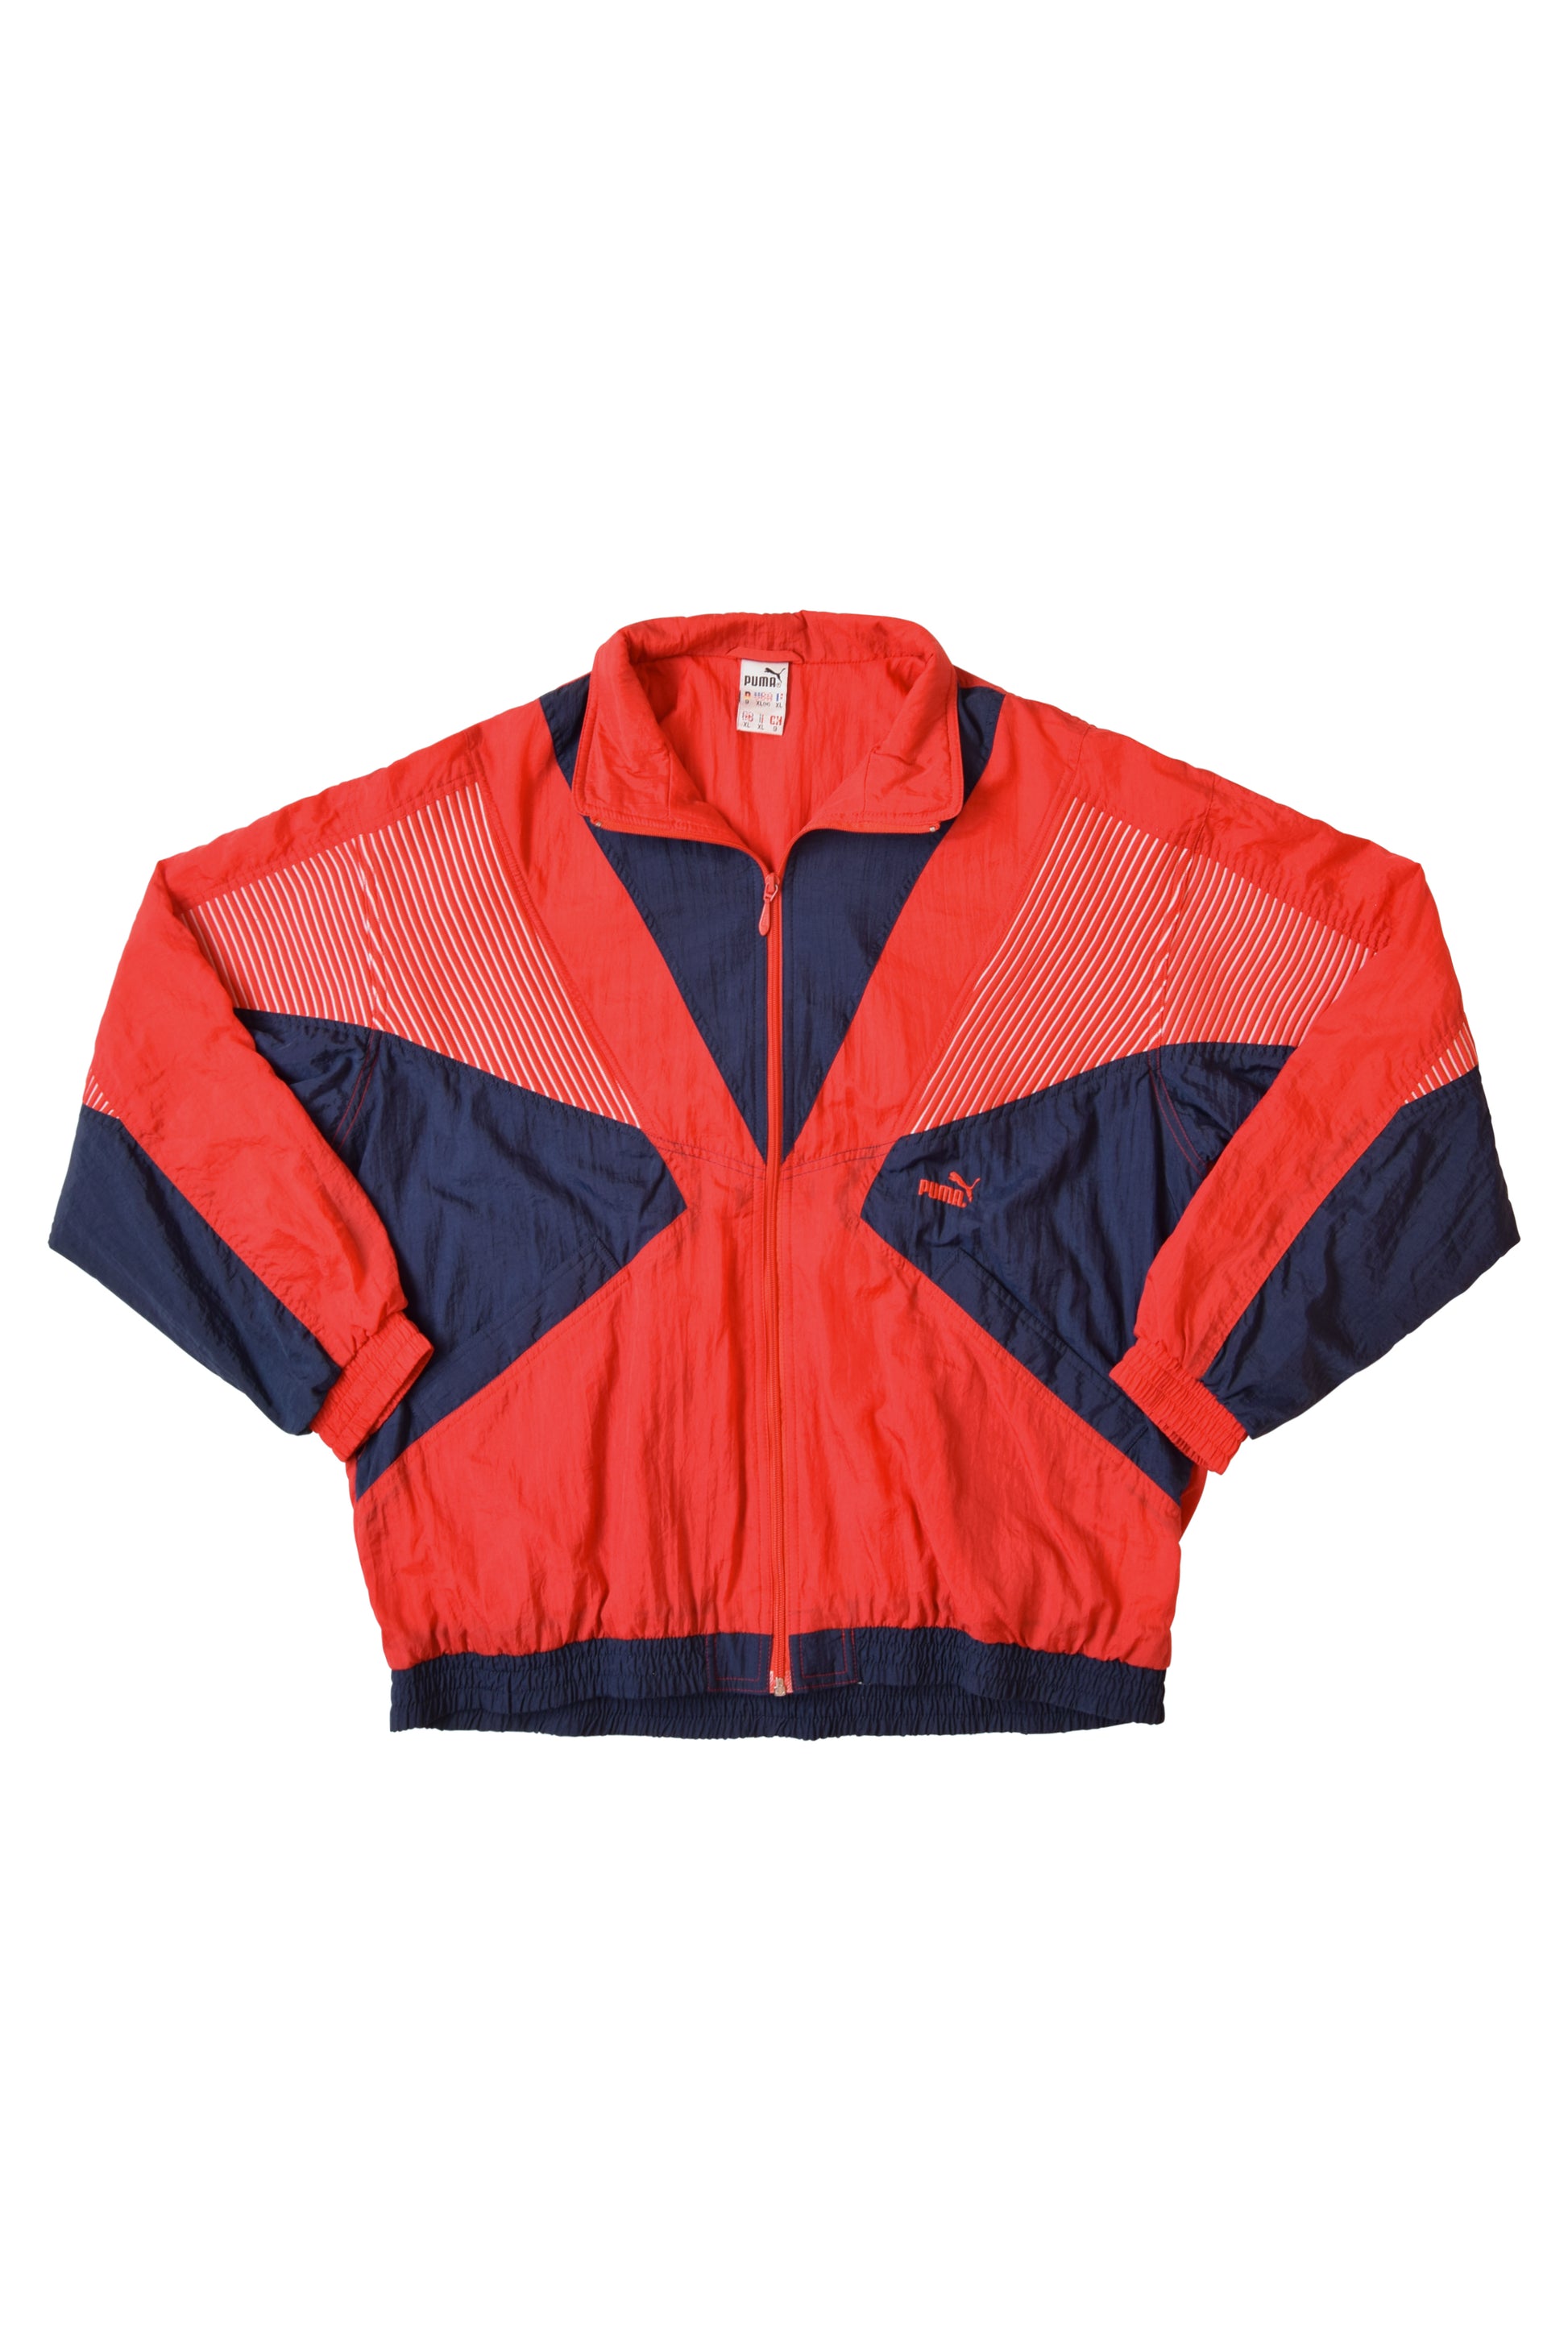 Vintage Puma Jacket / Shell 90's